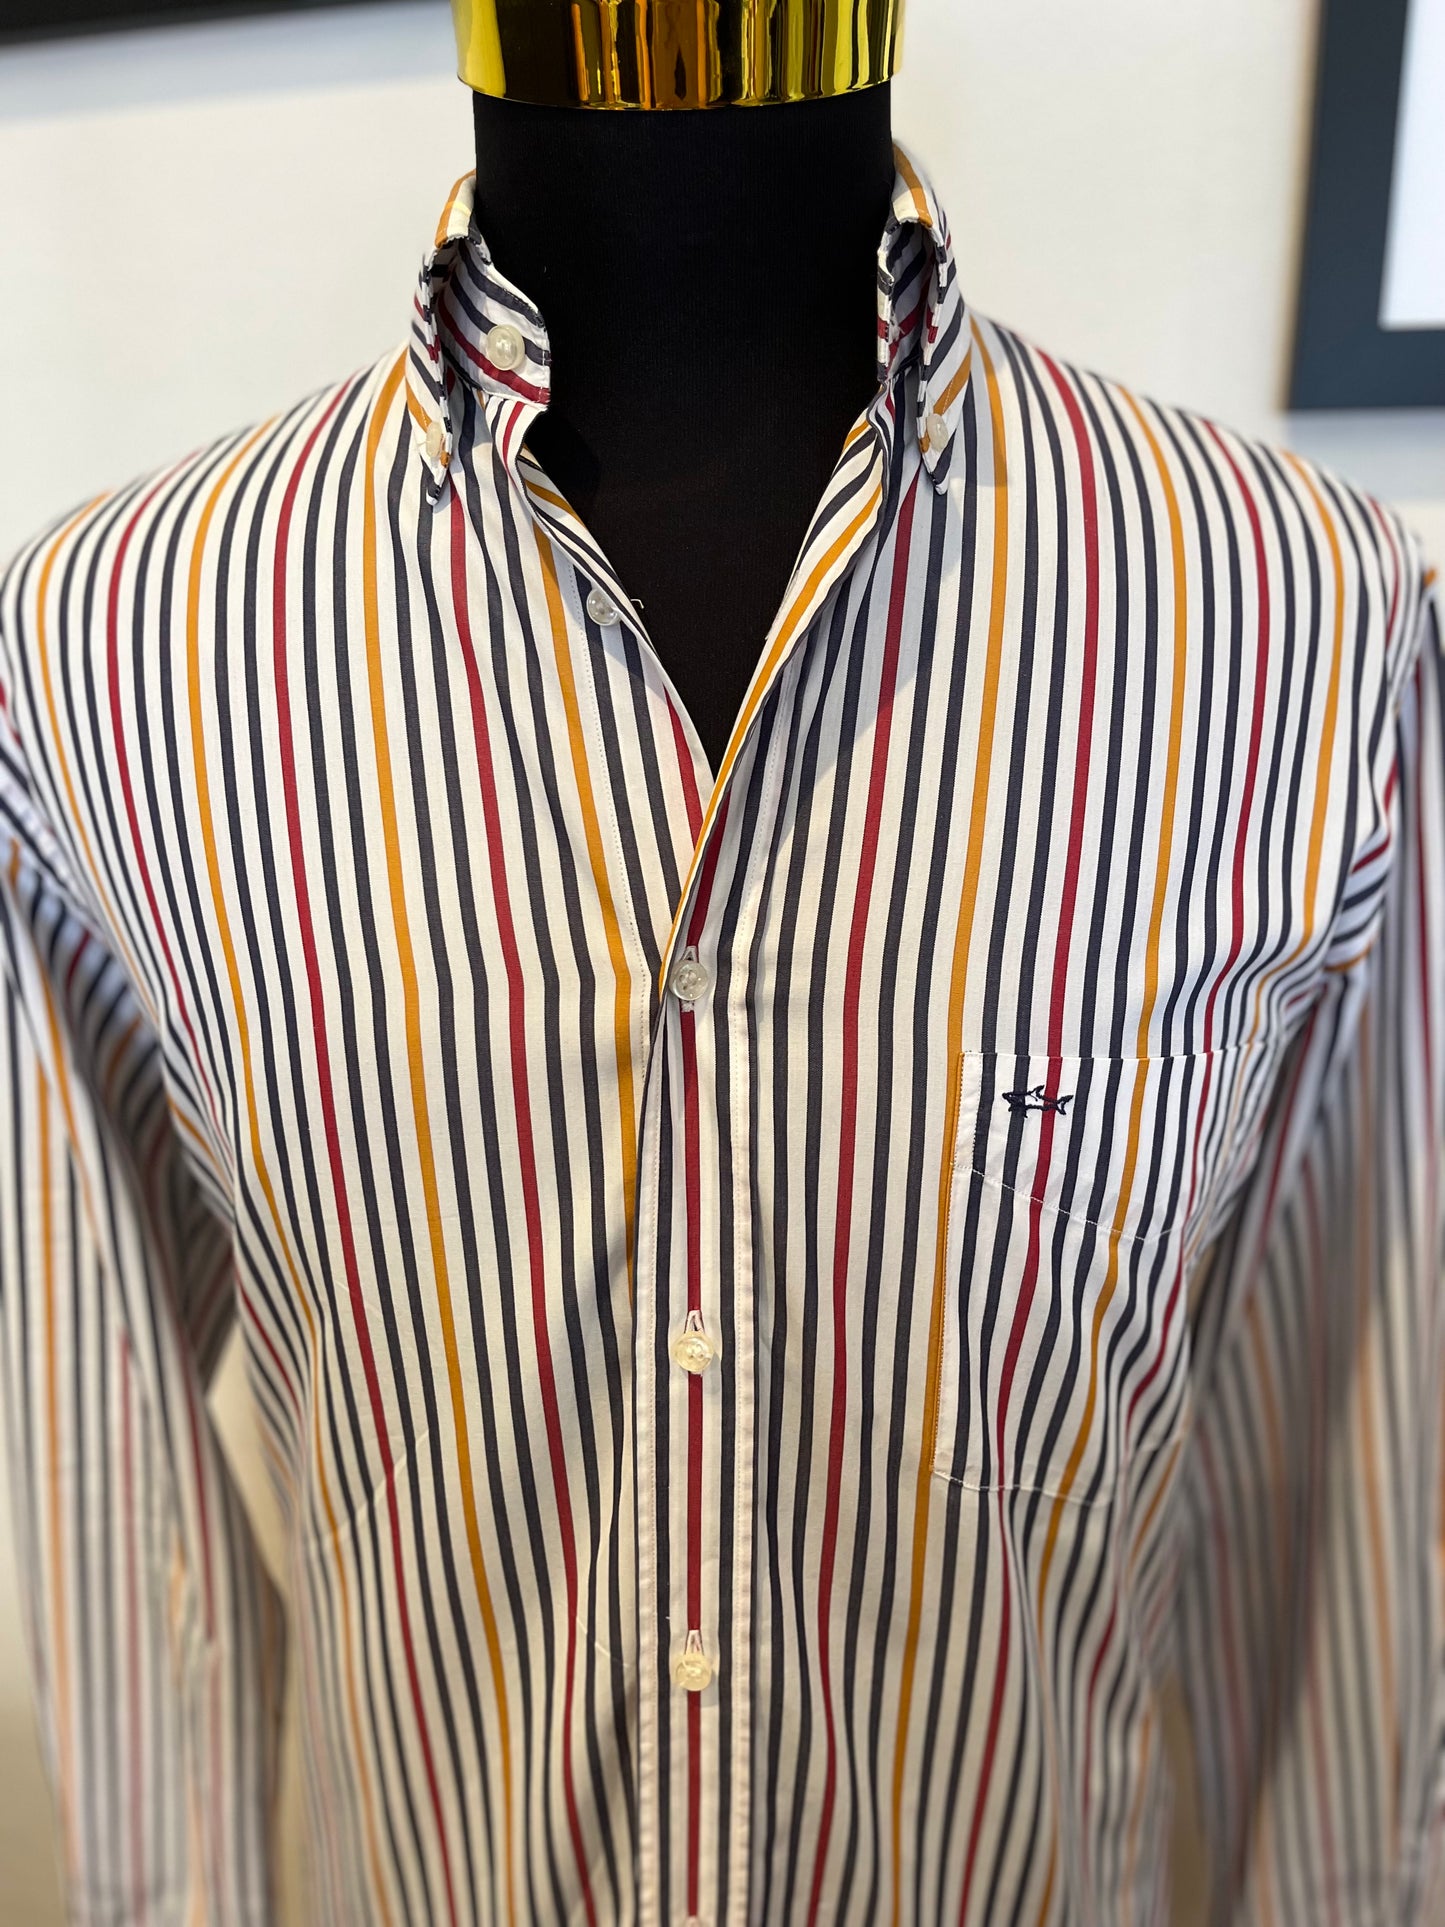 Paul & Shark 100% Cotton Yellow Blue Stripe Shirt Size 39 M to L Classic Fit Button Down Collar